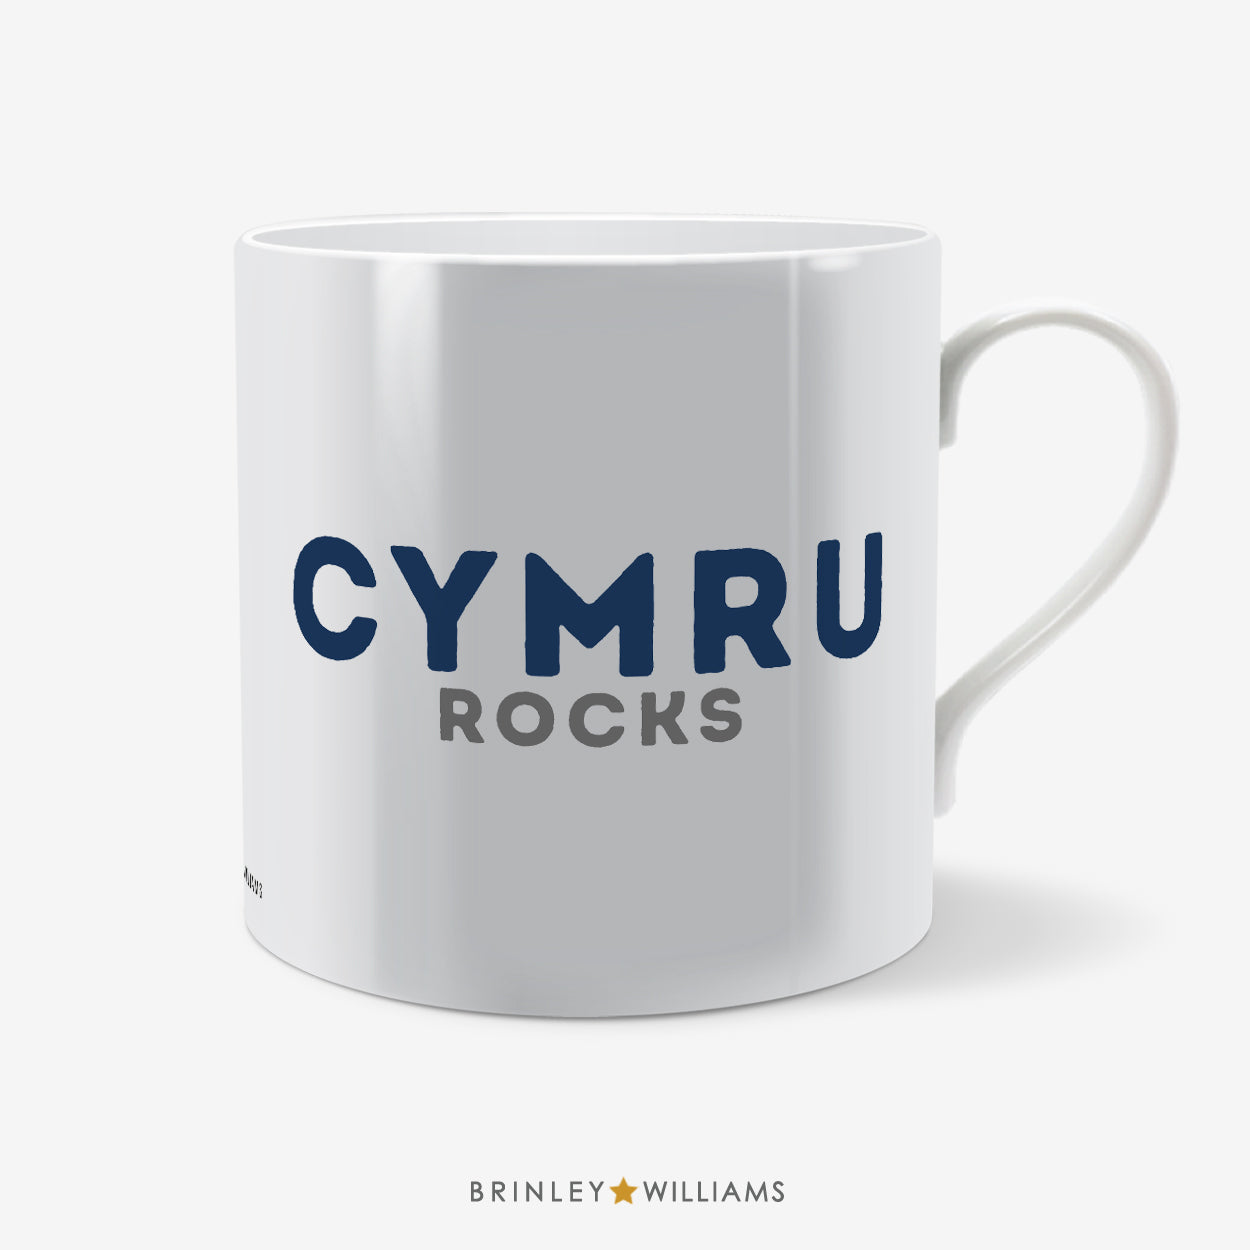 Cymru Rocks Welsh Mug - Navy